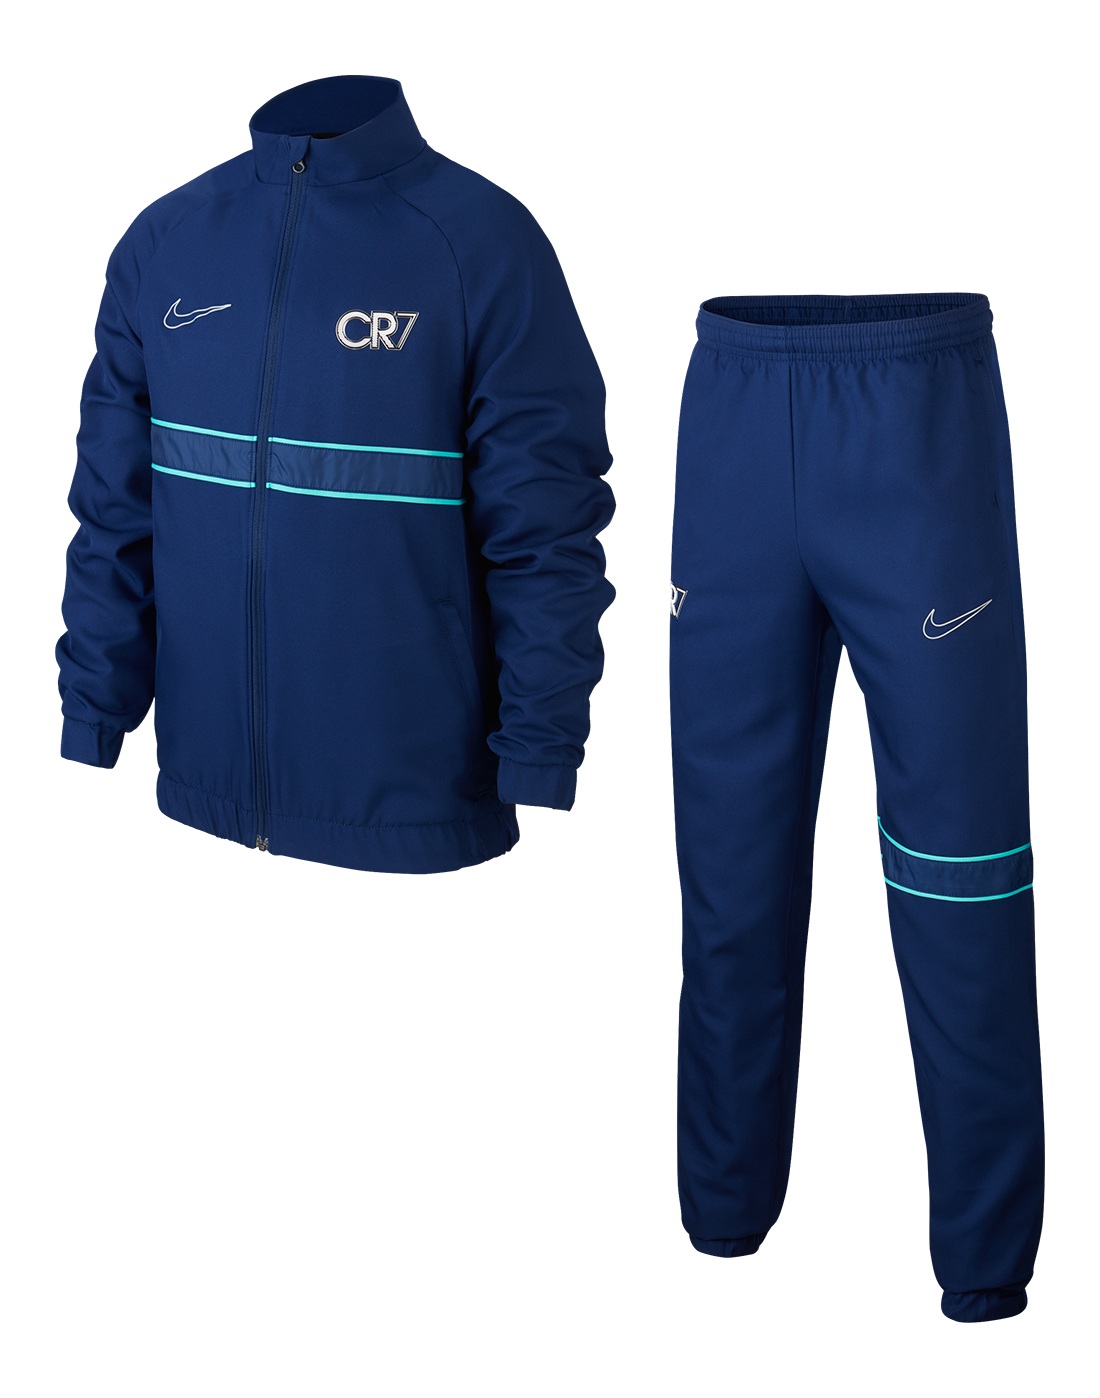 Nike Older Kids CR7 Tracksuit - Blue | Life Style Sports UK